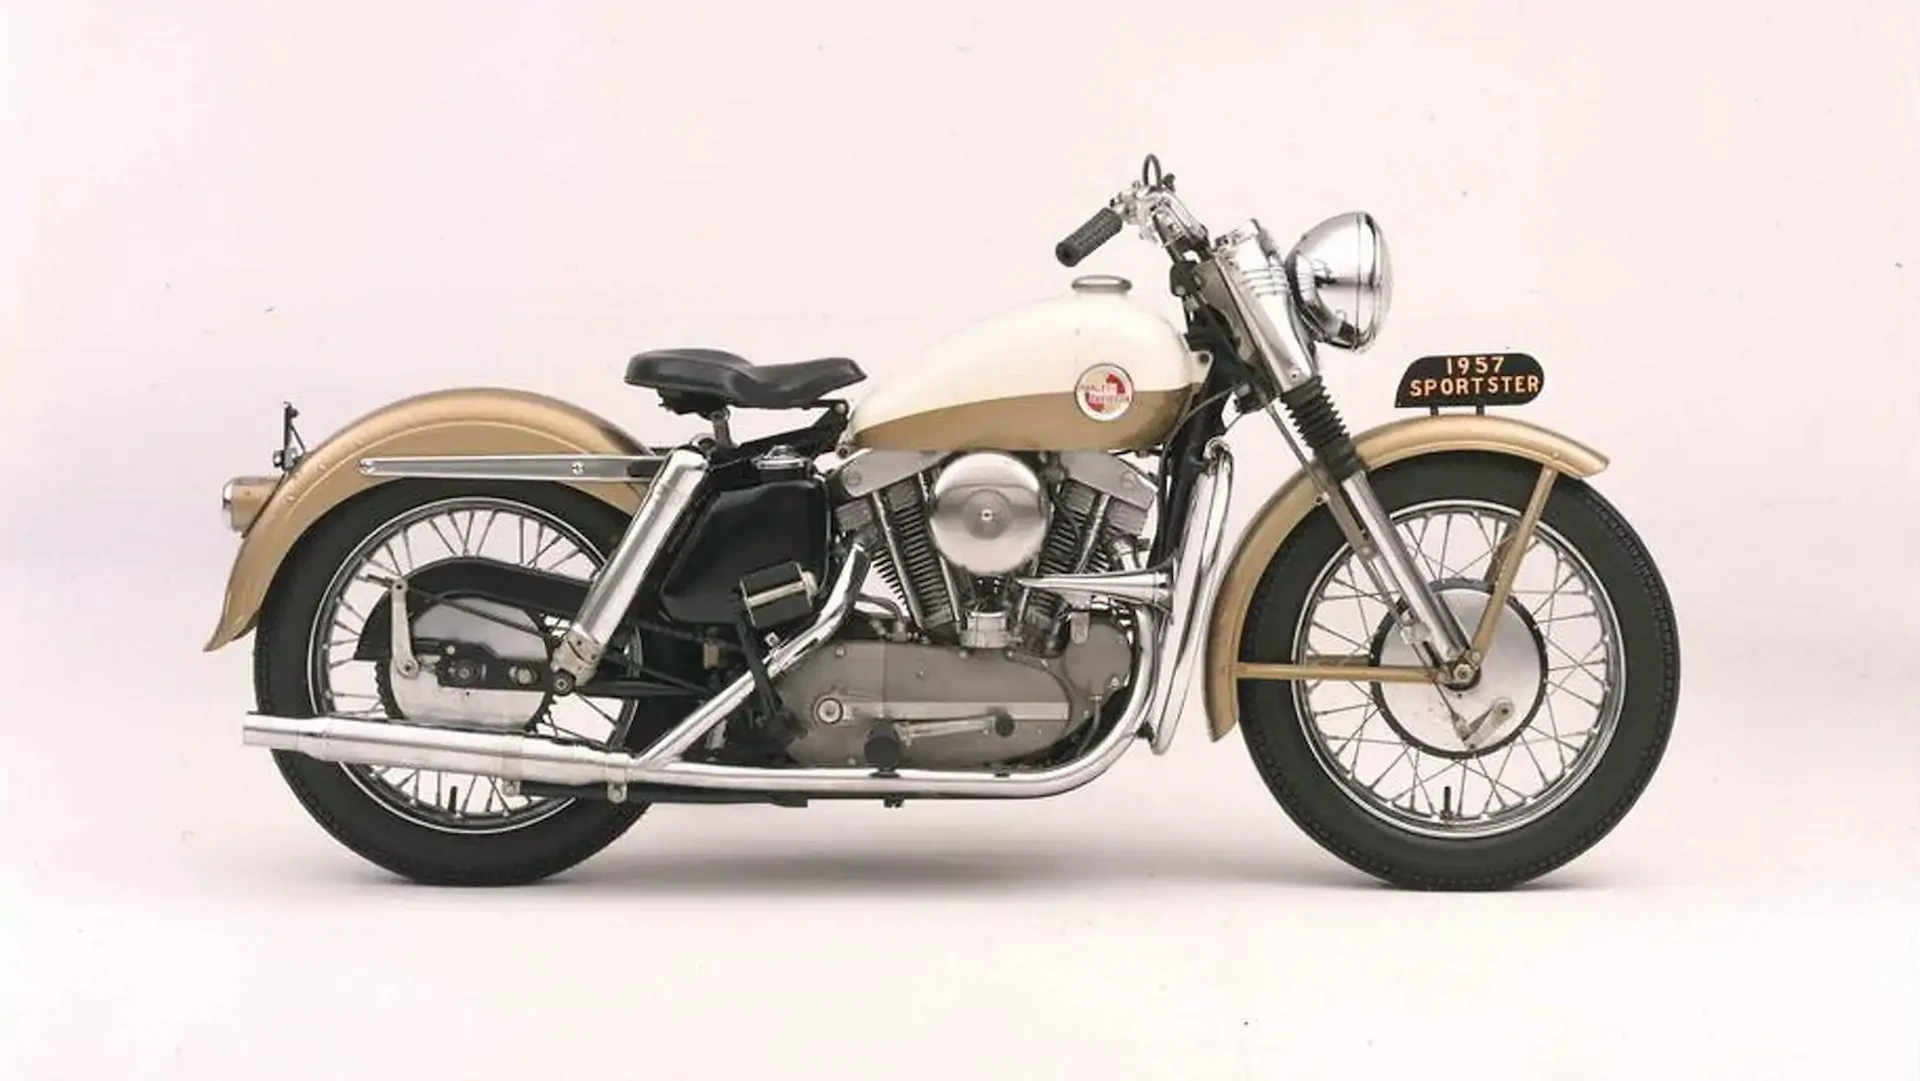 Moto del día: Harley-Davidson XL 883 Sportster (1957)